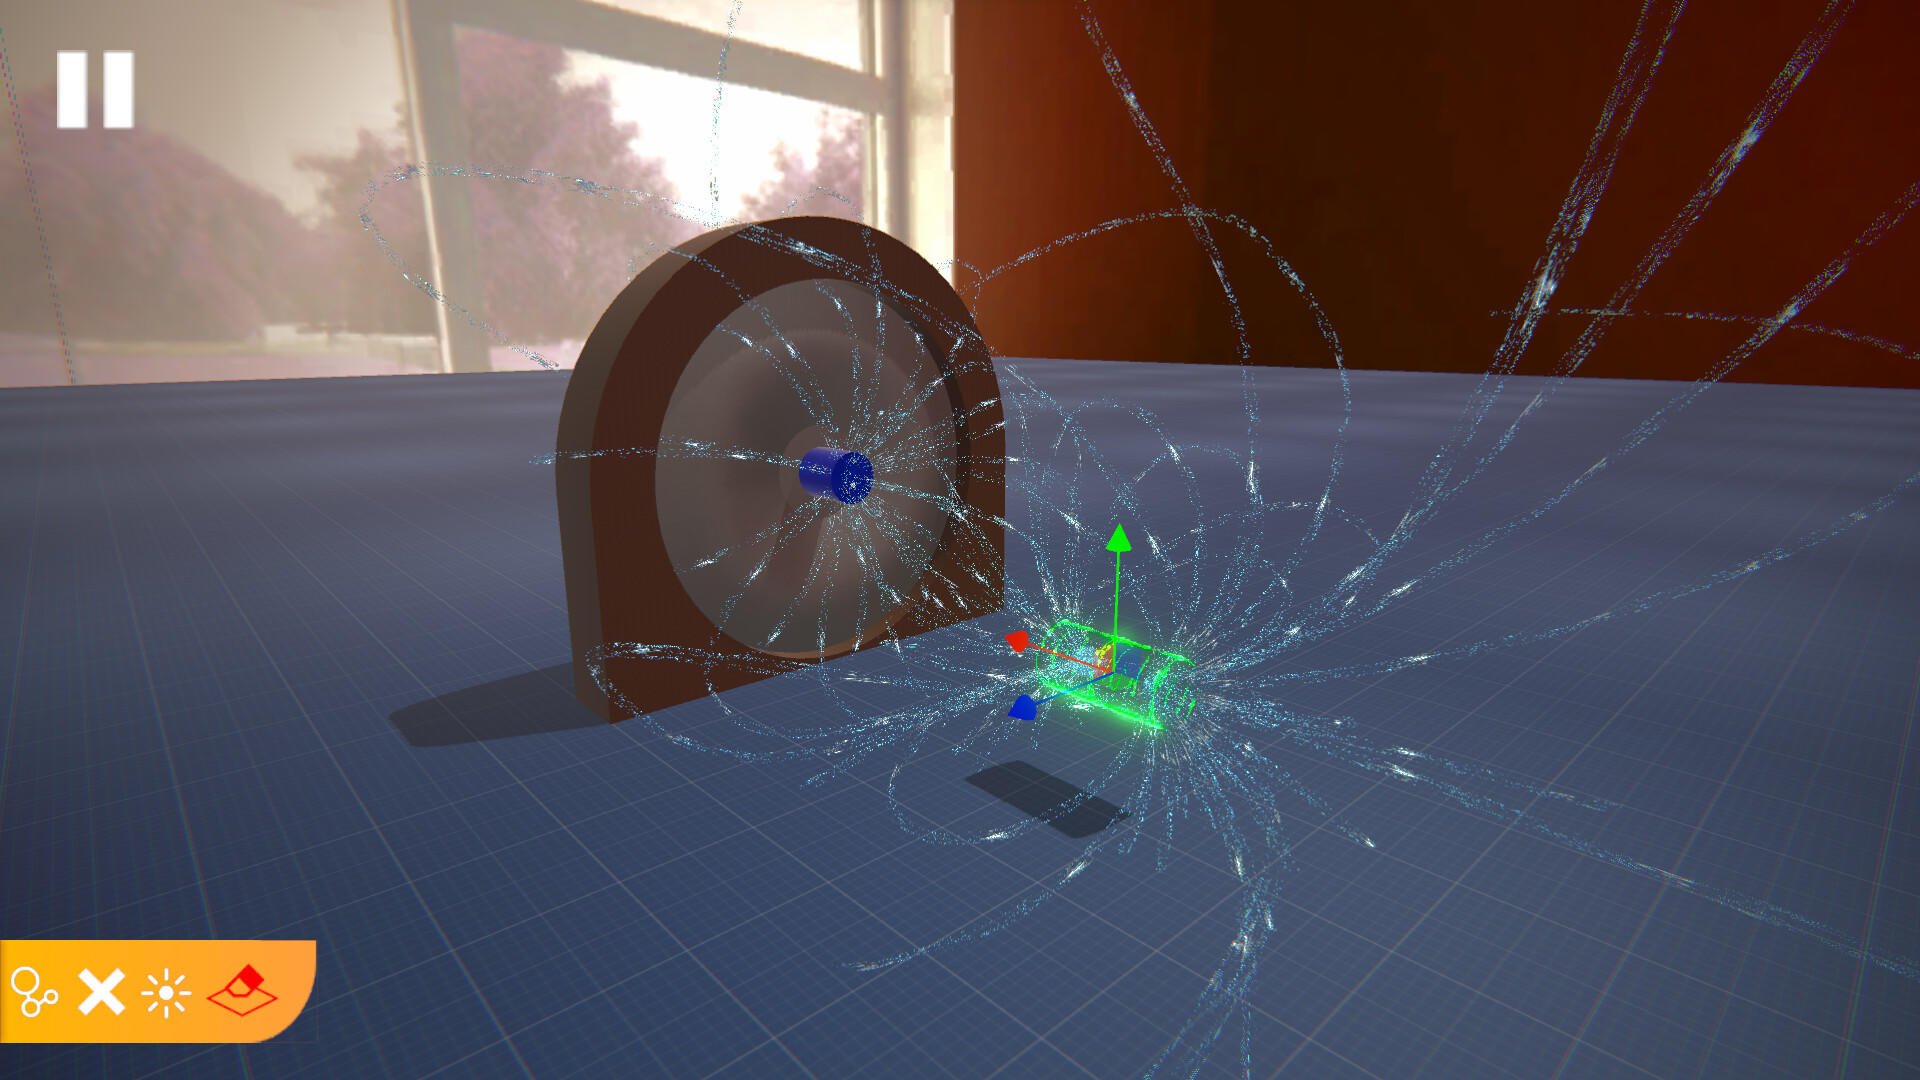 Screenshot of Magnet Mania 3D